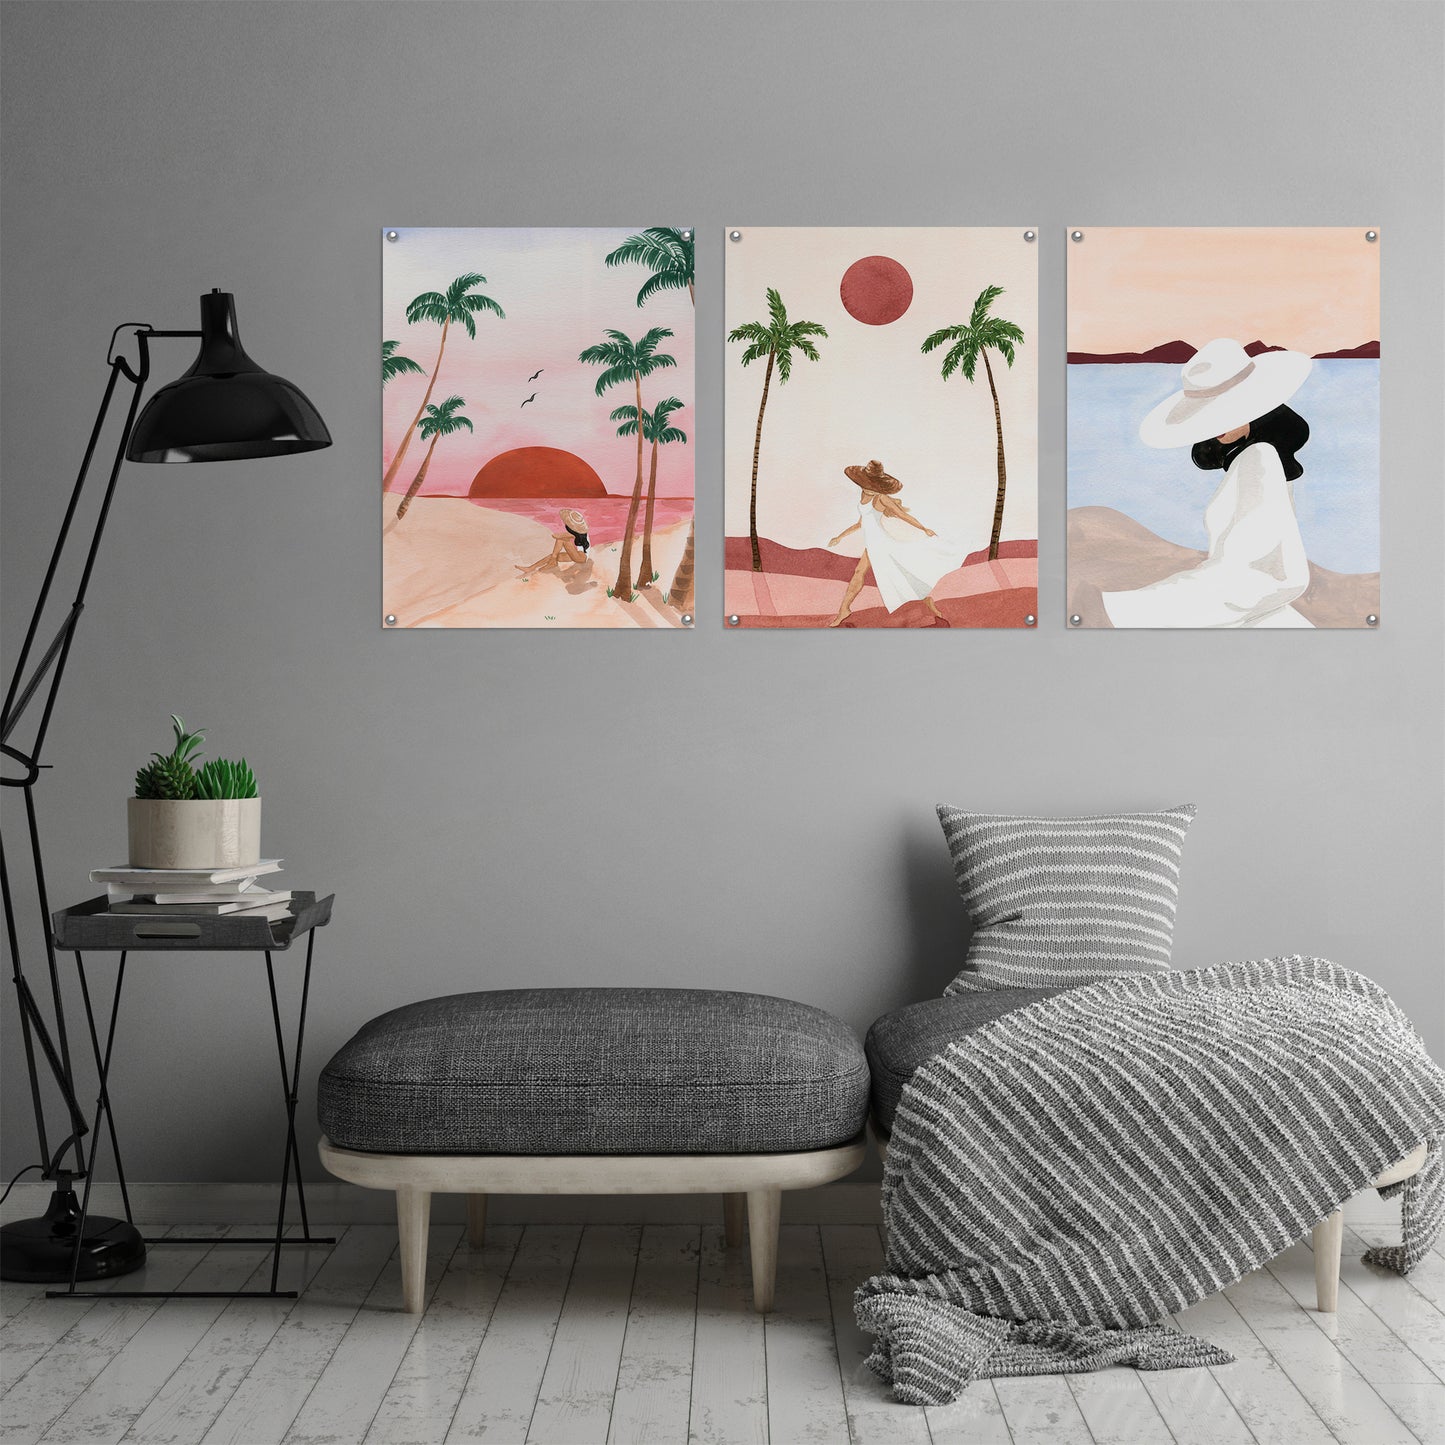 (Set of 3) Triptych Wall Art Sunset Terracotta Travels by Sabina Fenn - Poster Print